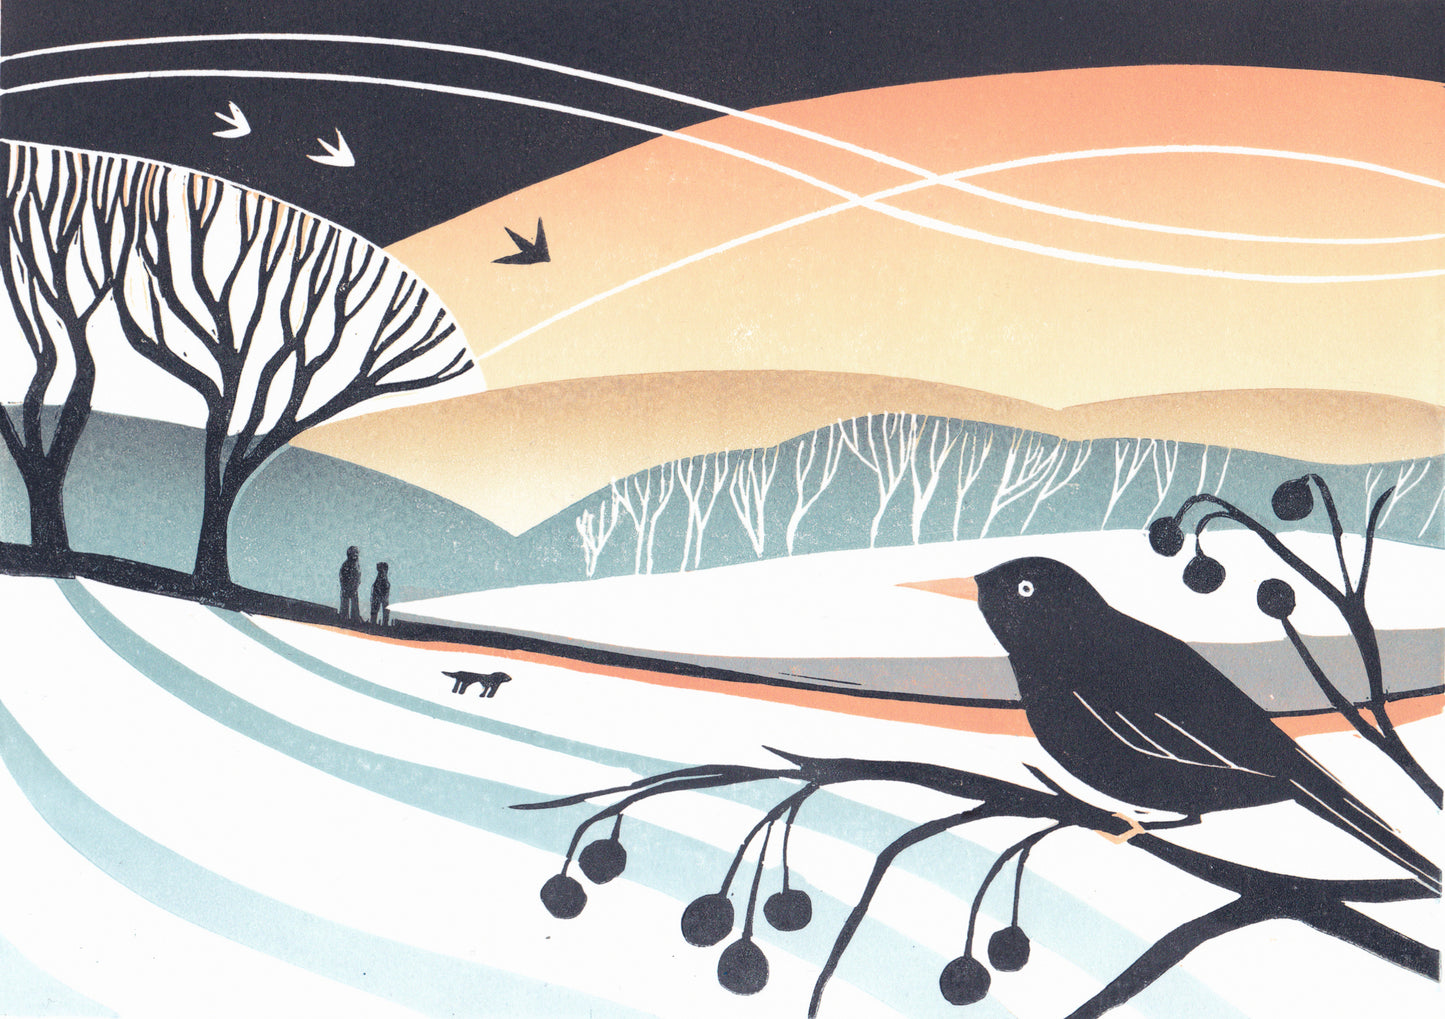 Midwinter's Eve - Original Lino Print | Limited Edition | Winter Landscape | Blackbird